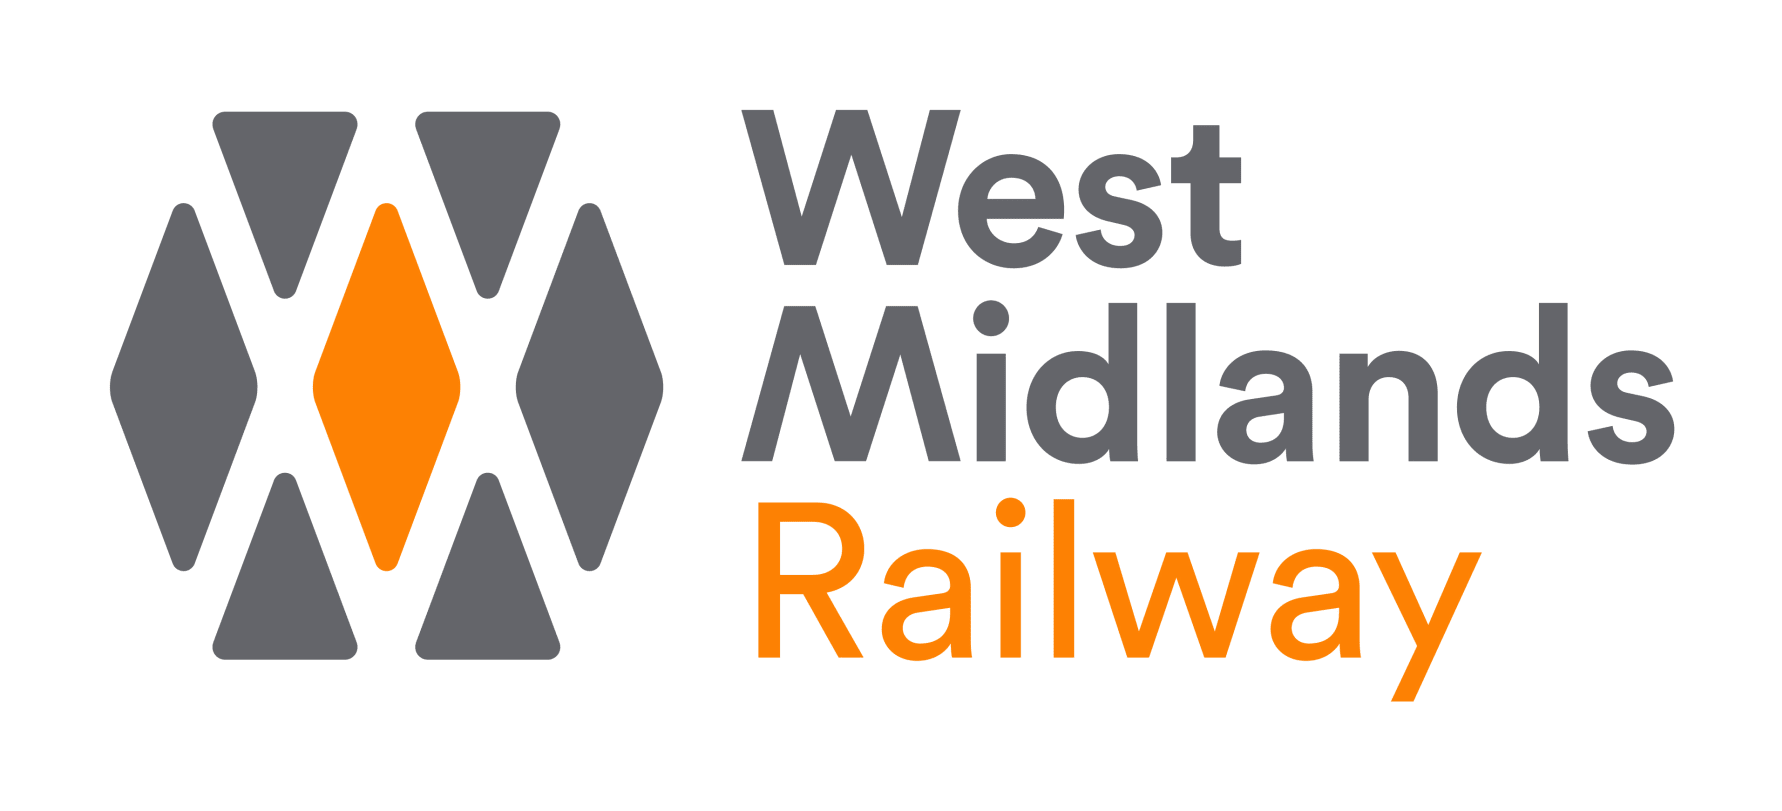 New rail timetable to benefit passengers in Birmingham